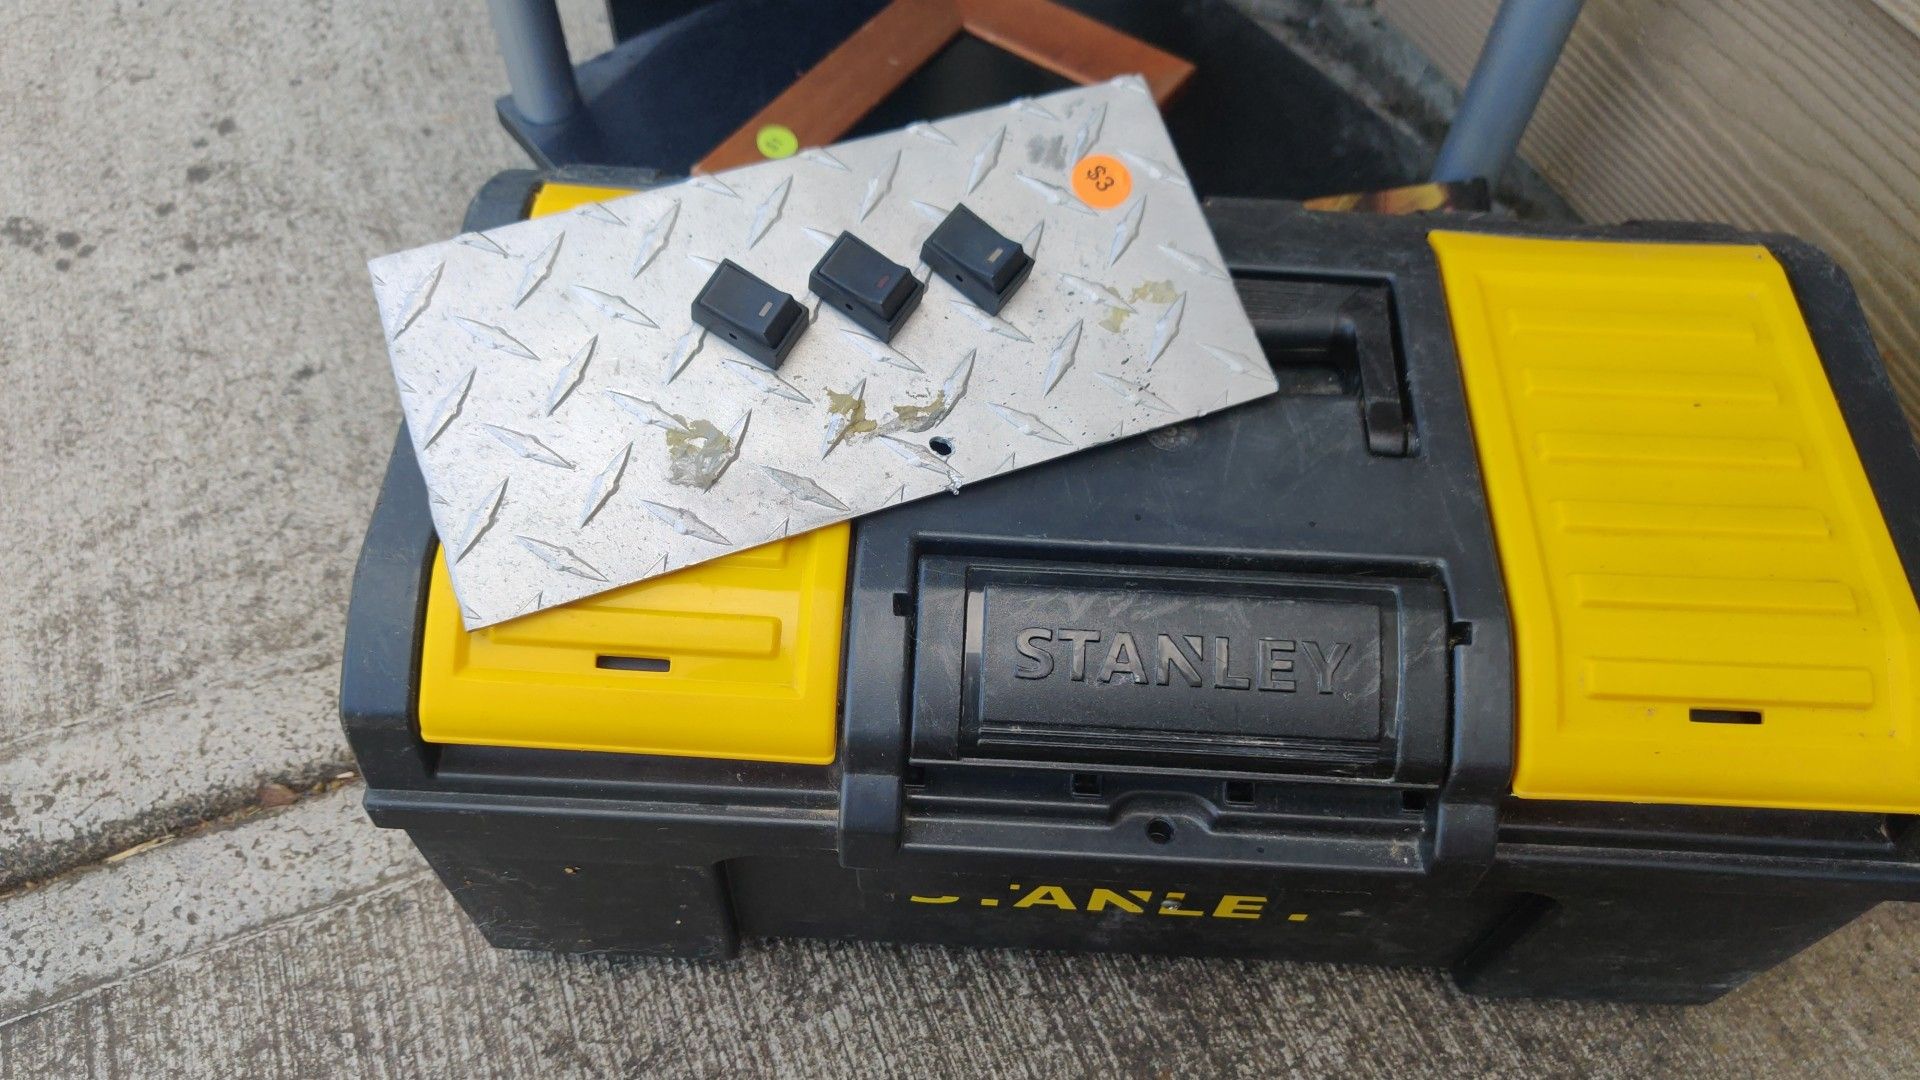 Stanley tool box, 3 switch rocker panel